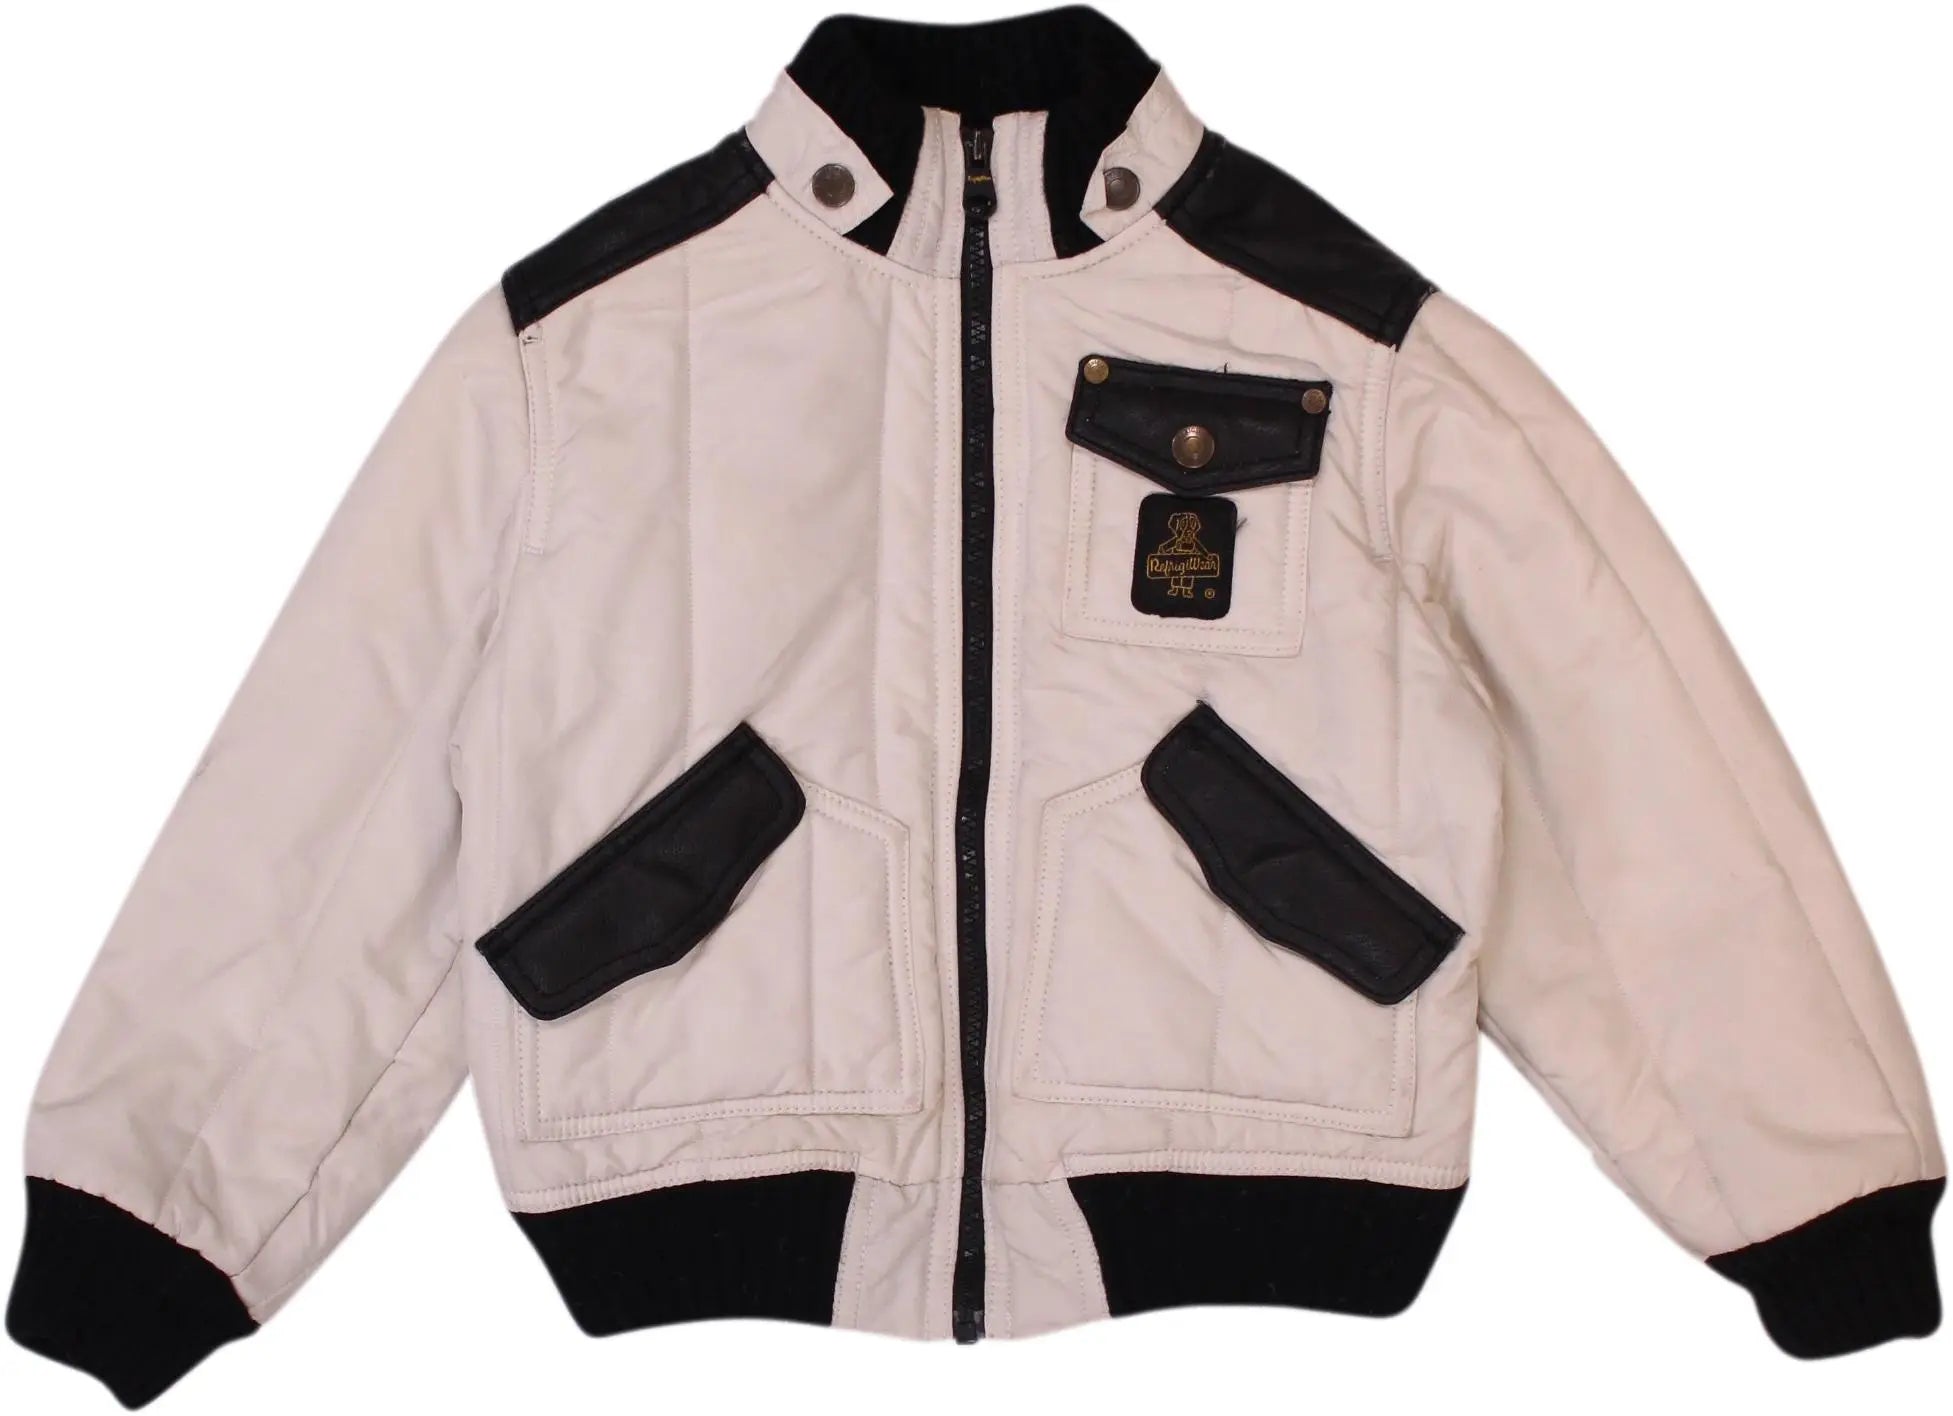 Refrigi Wear - White Jacket- ThriftTale.com - Vintage and second handclothing